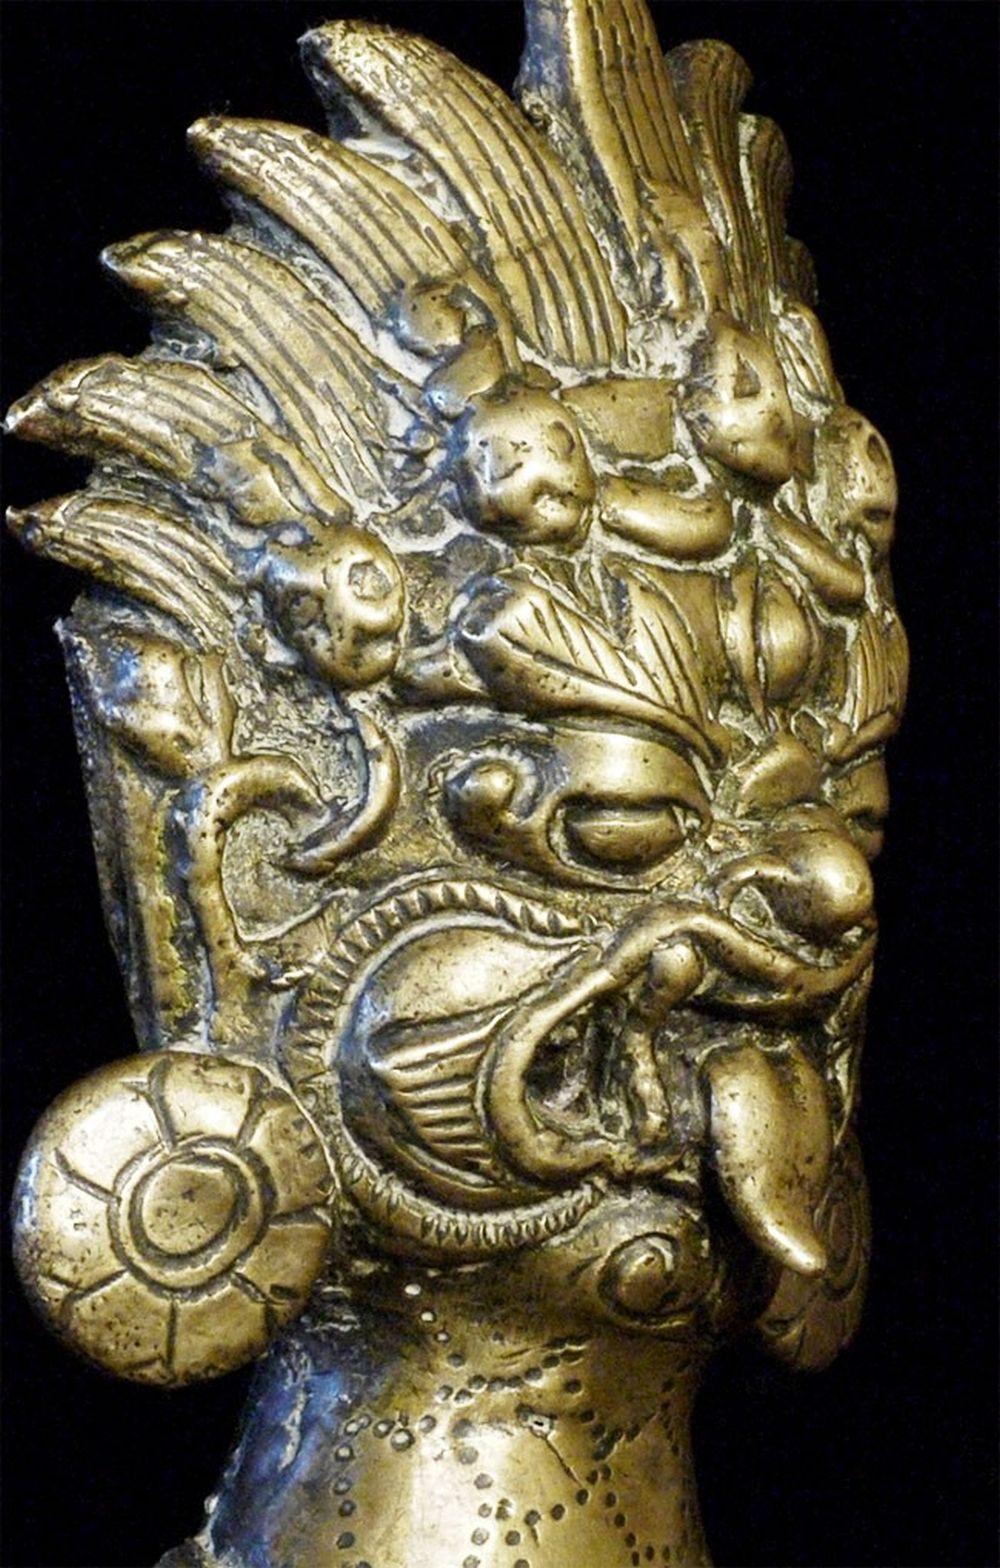 18th/19thC Nepalese Bronze or Brass Fierce Deity - 8630 In Good Condition For Sale In Ukiah, CA